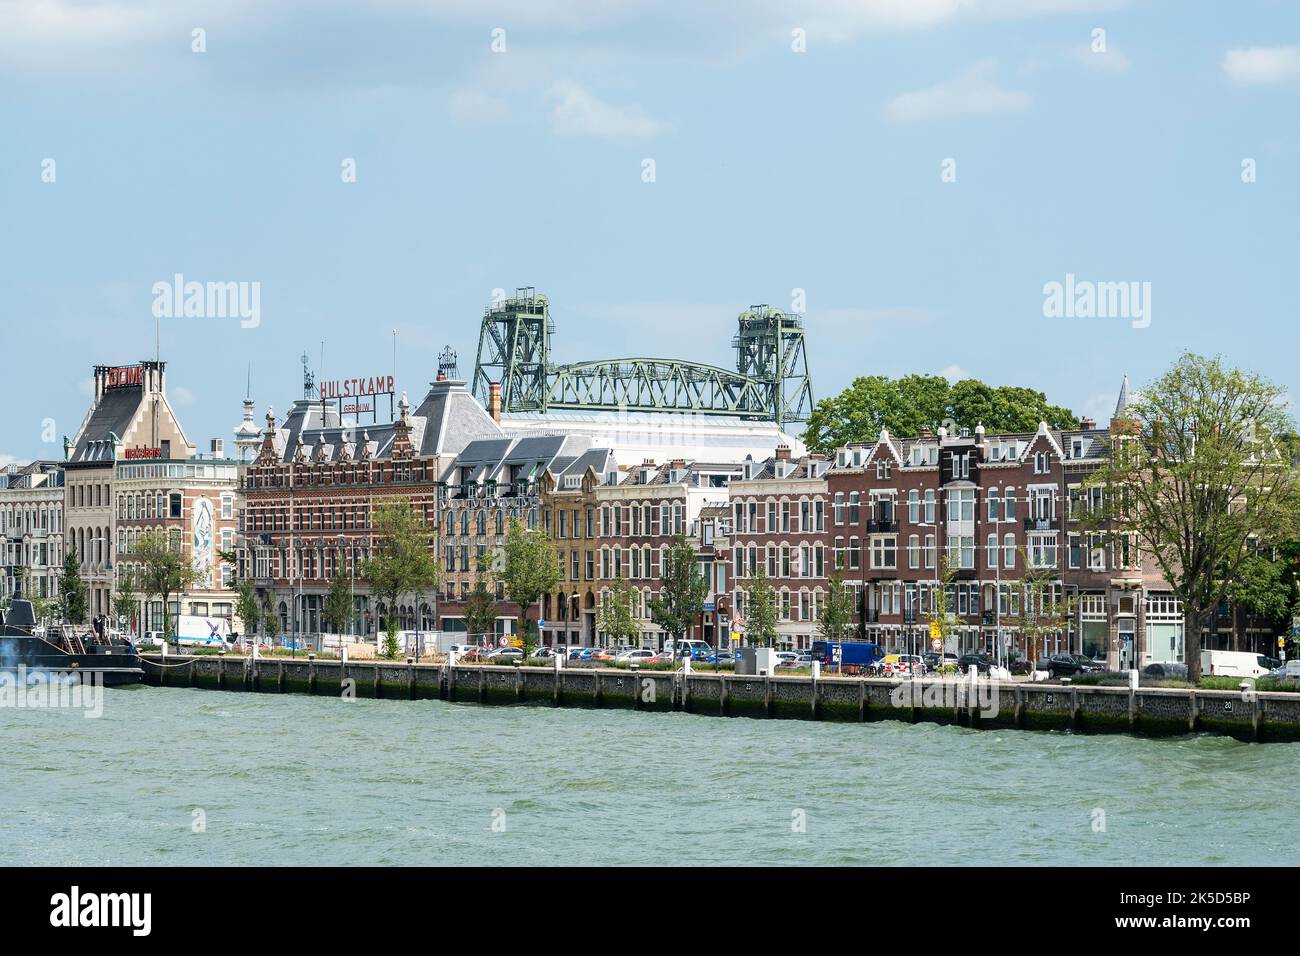 Niederlande, Rotterdam, Noordereiland, Hulstkamp Gebäude Stockfoto